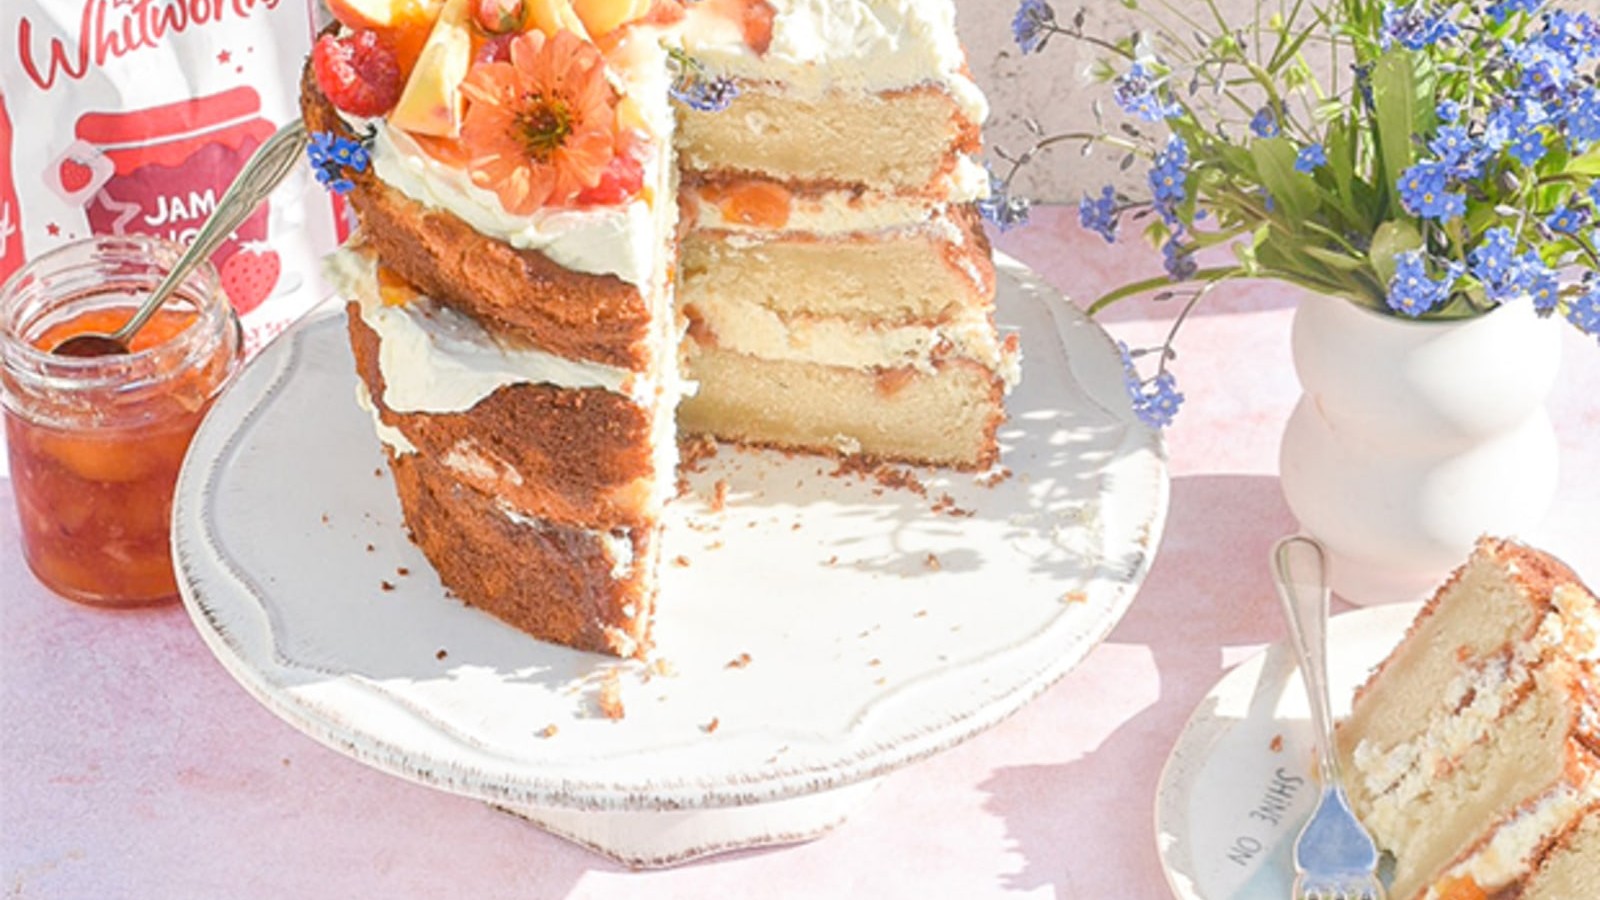 Image of Peaches and Cream Cake with Peach Bellini Jam